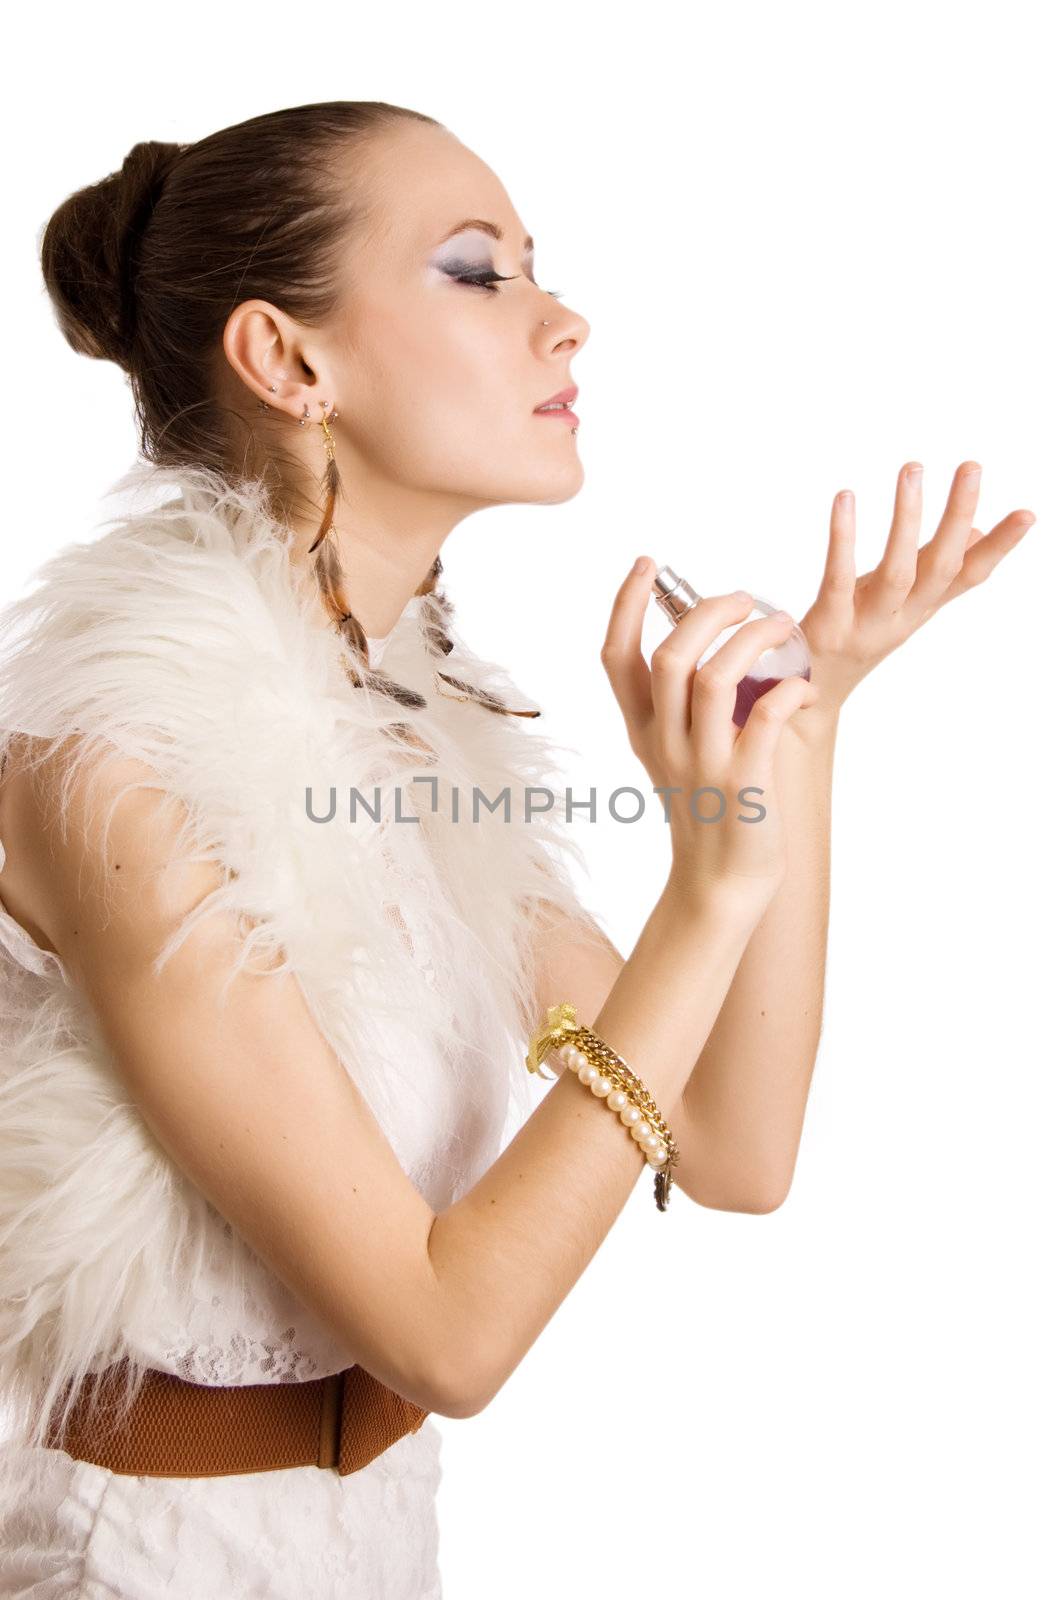 Fashion woman applying perfume on her waist over white